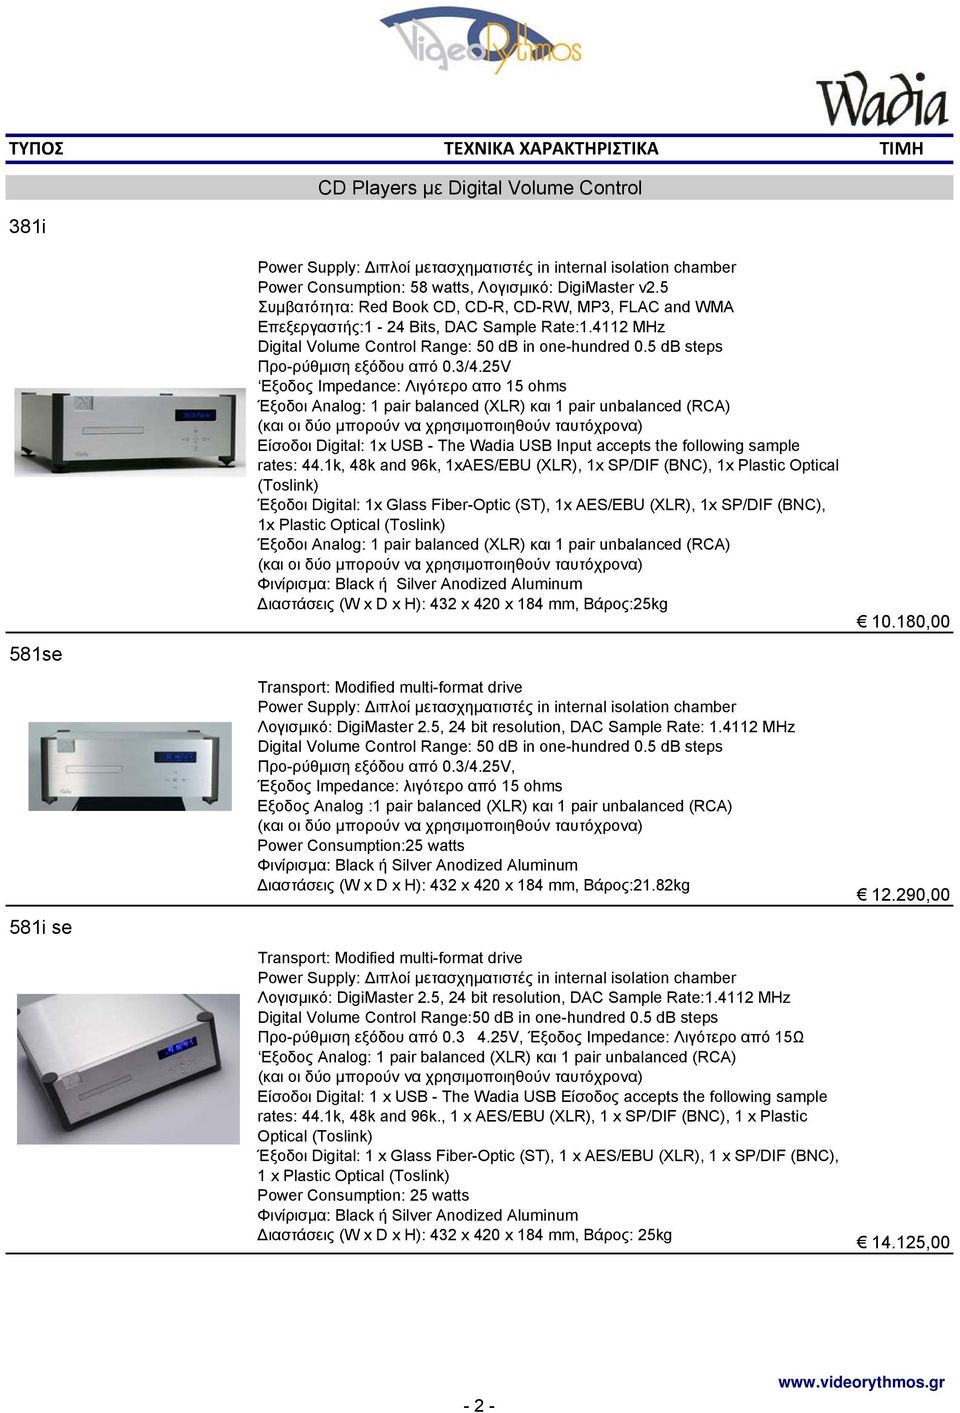 25V Εξοδος Impedance: Λιγότερο απο 15 ohms Έξοδοι Analog: 1 pair balanced (XLR) και 1 pair unbalanced (RCA) Είσοδοι Digital: 1x USB - The Wadia USB Input accepts the following sample rates: 44.